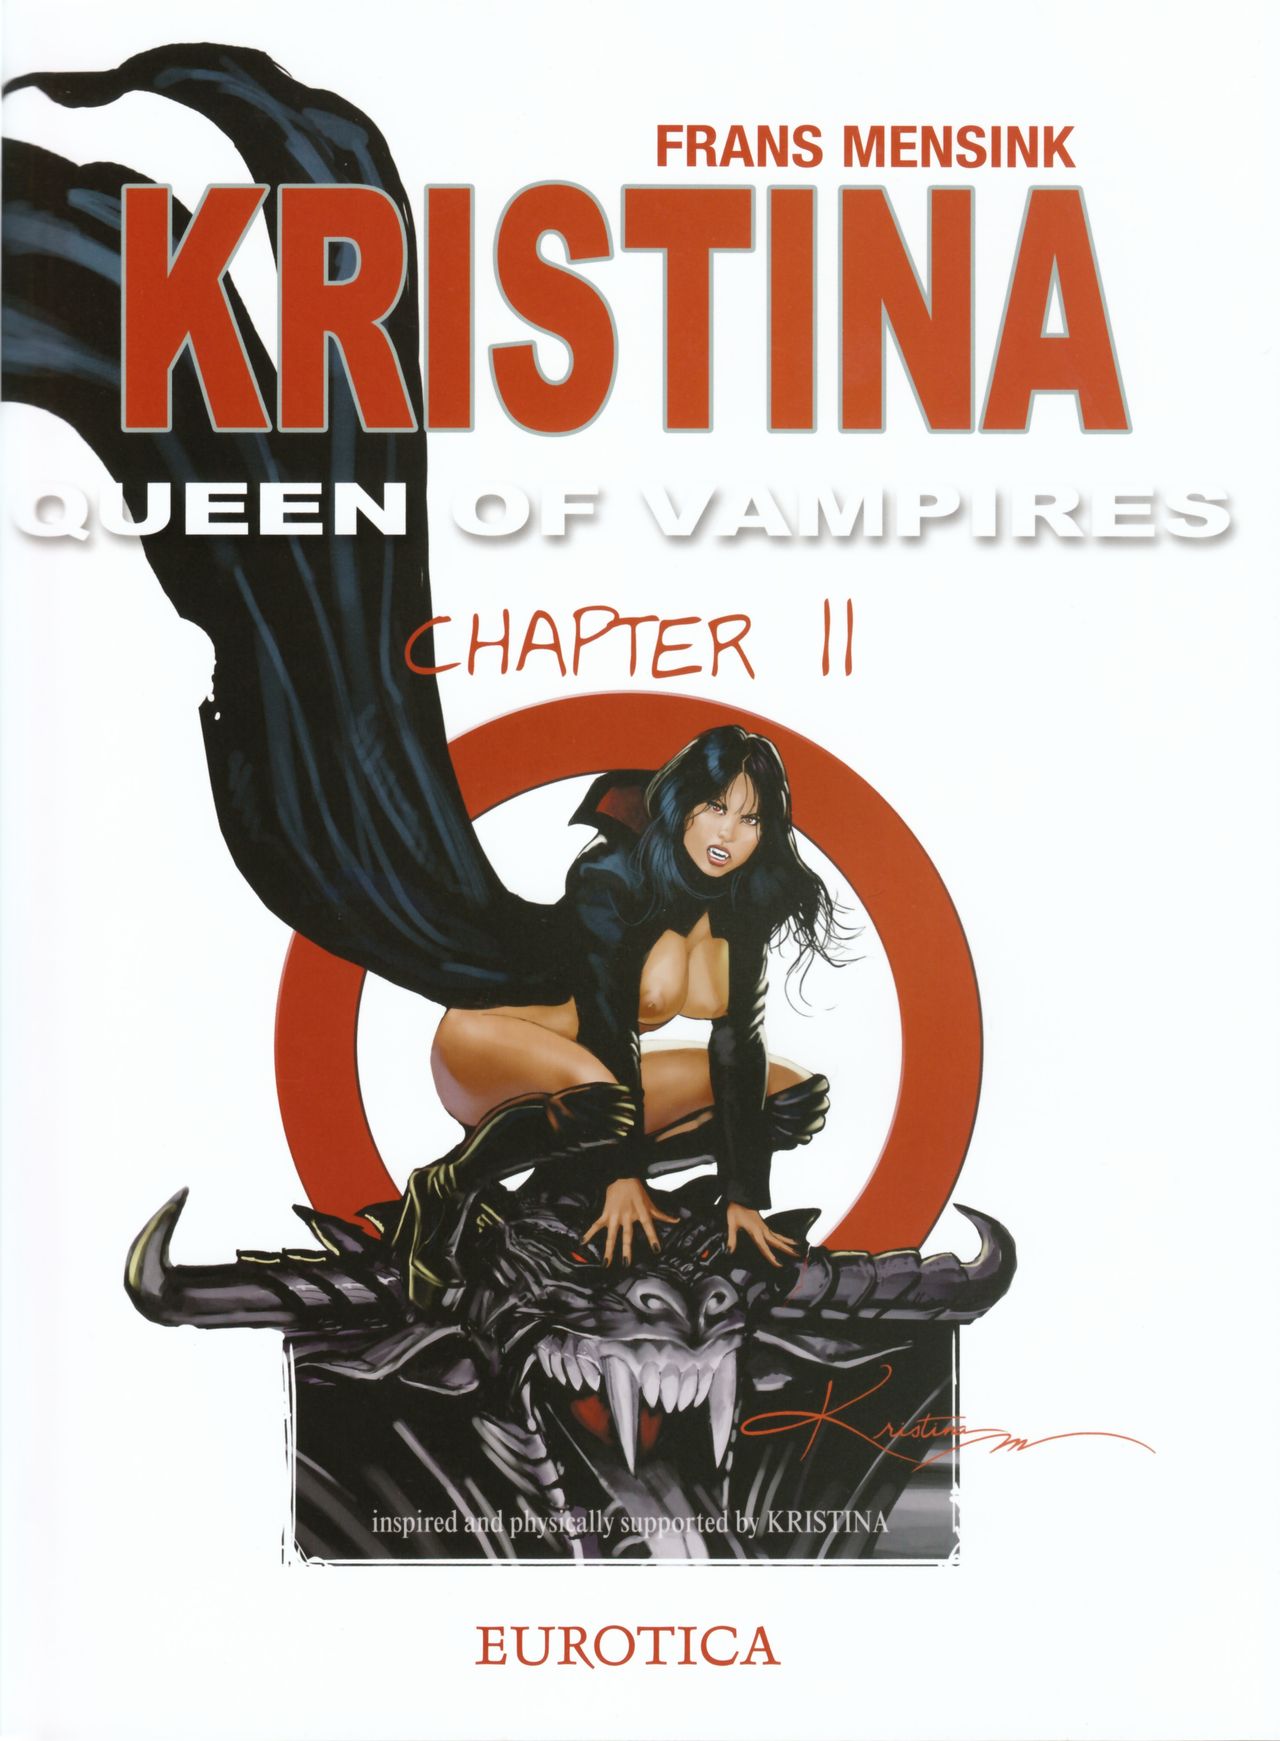 [Frans Mensink] Kristina Queen of Vampires - Chapter 2 [English] 